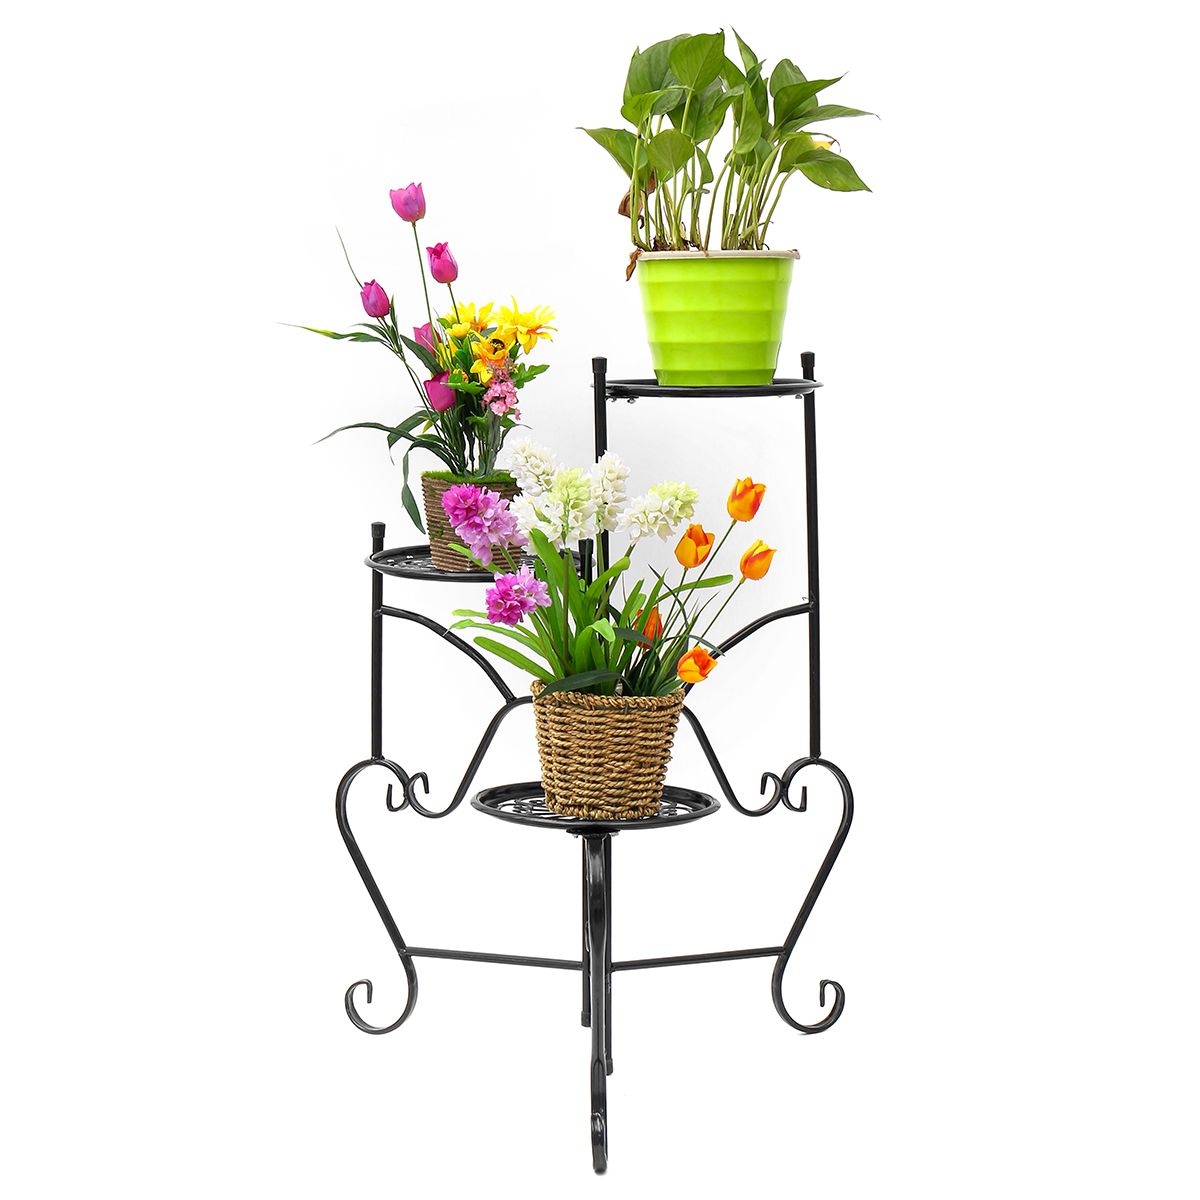 UK-Metal-Flower-Stand-Plant-Pot-Holder-Space-Saving-Decorative-Display-Shelf-DIY-1682478